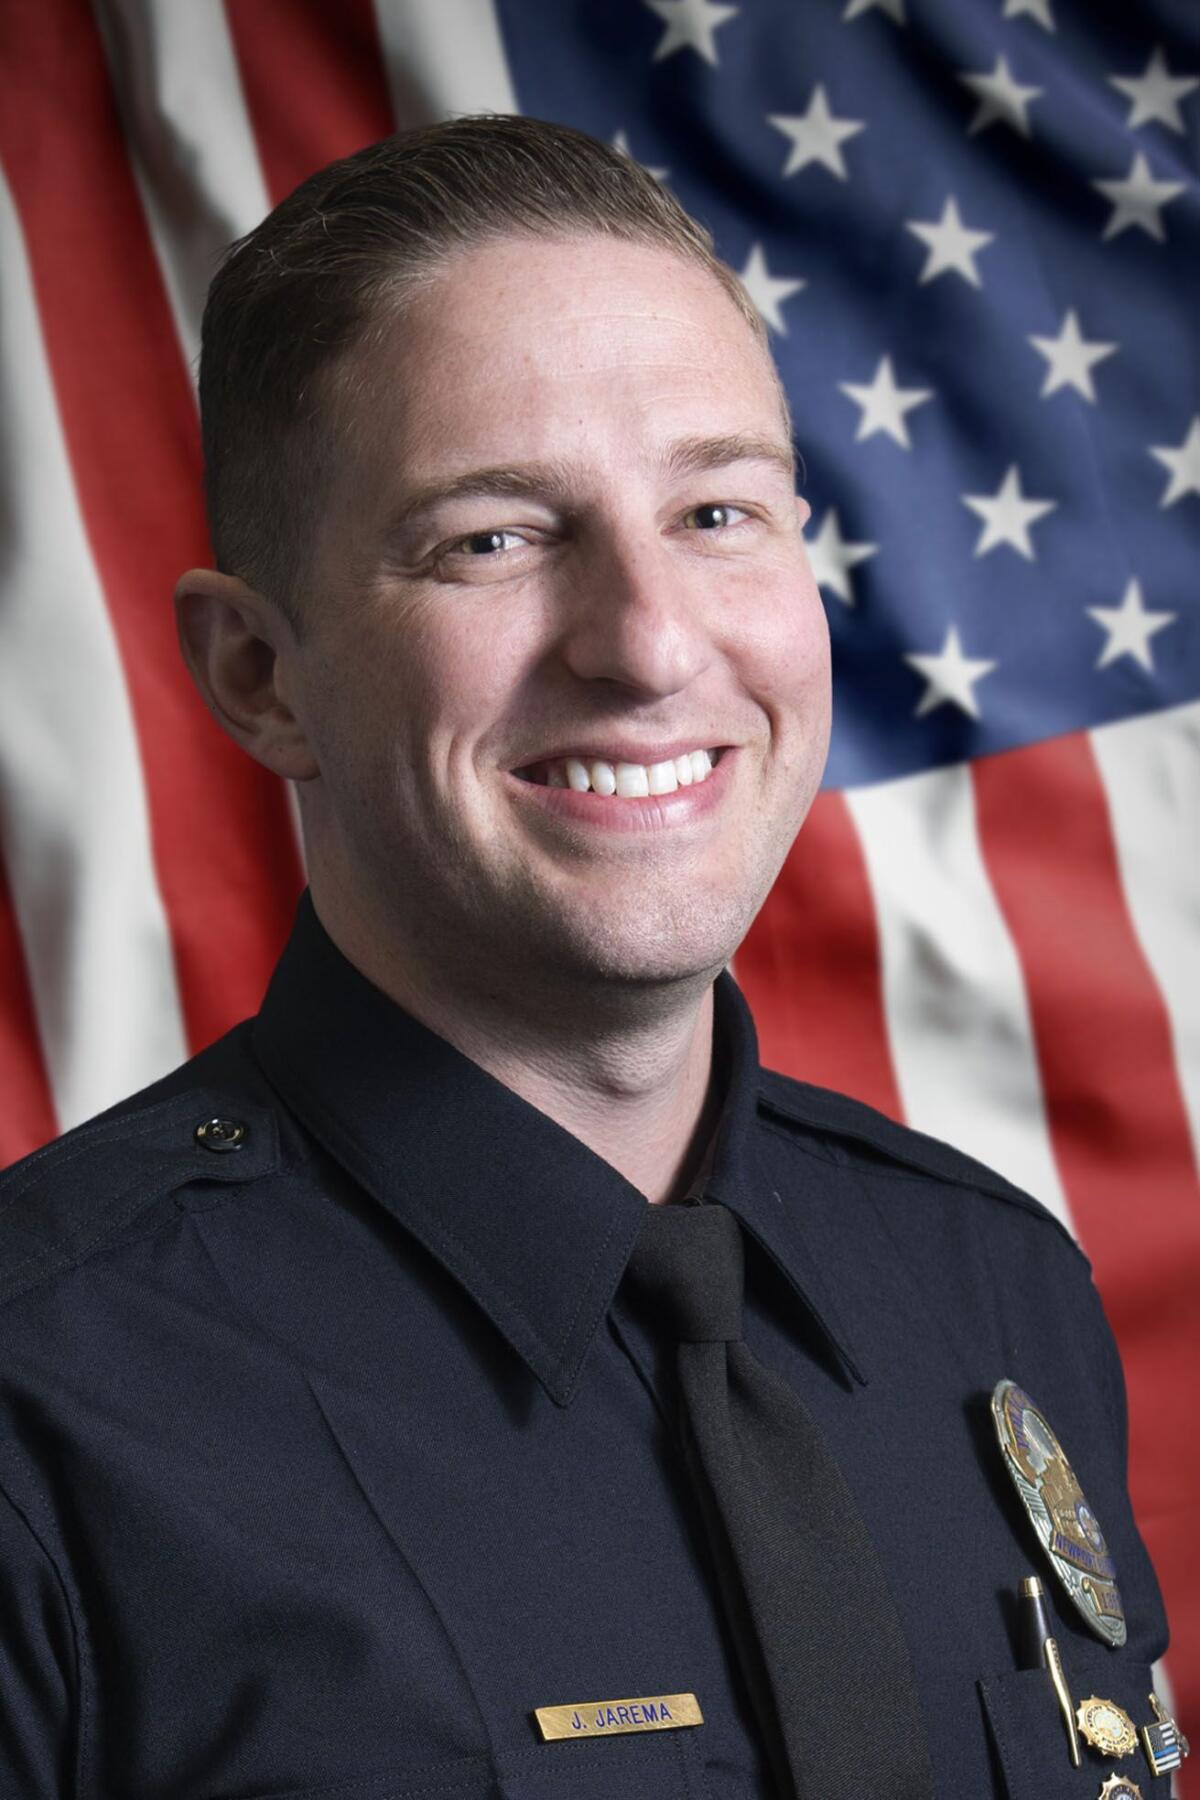 Newport Beach Police Department Det. Jon Jarema, who died last year and was honored by his peers this week.